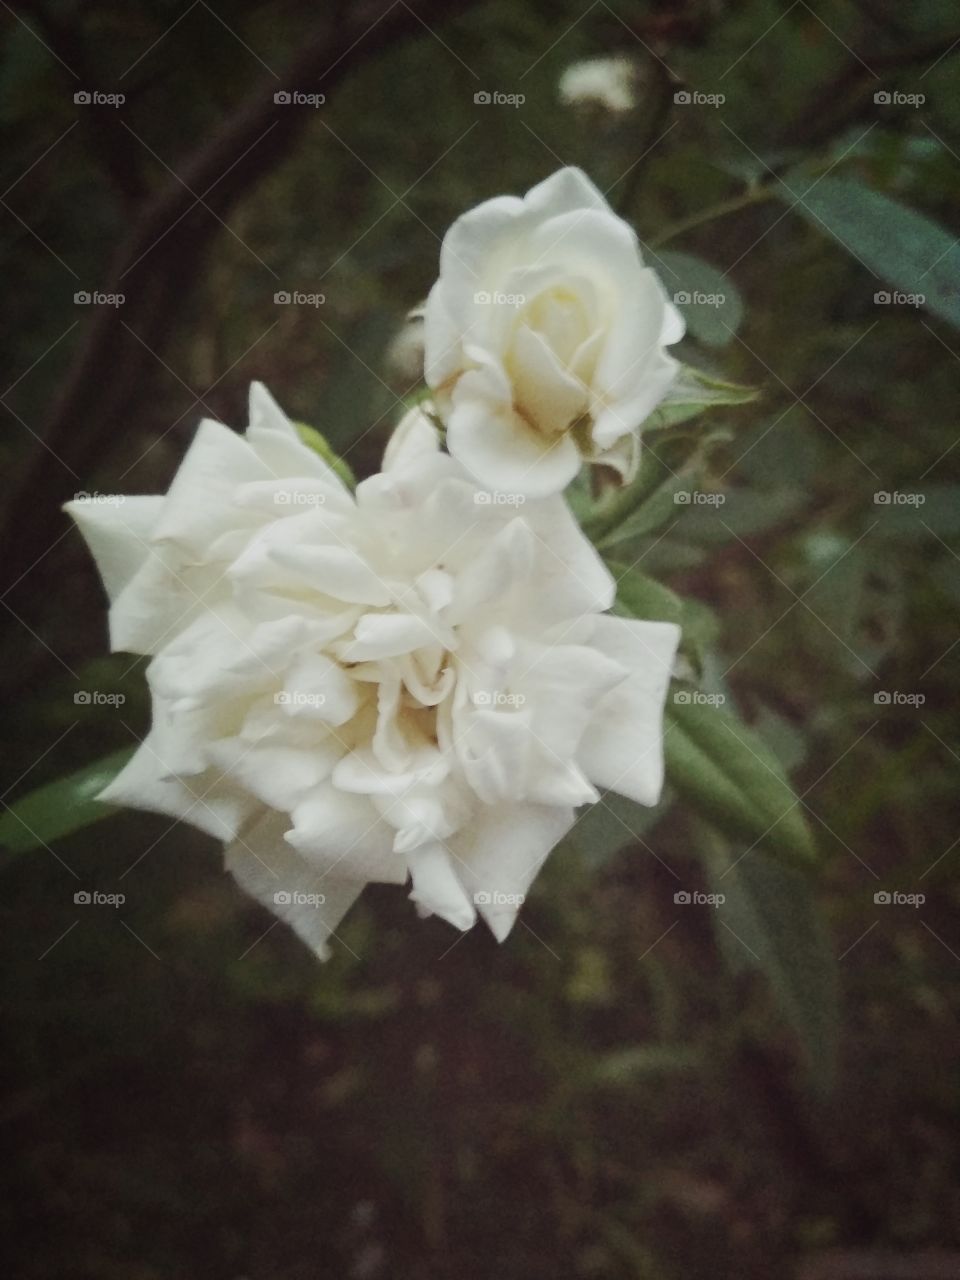 White roses, peace